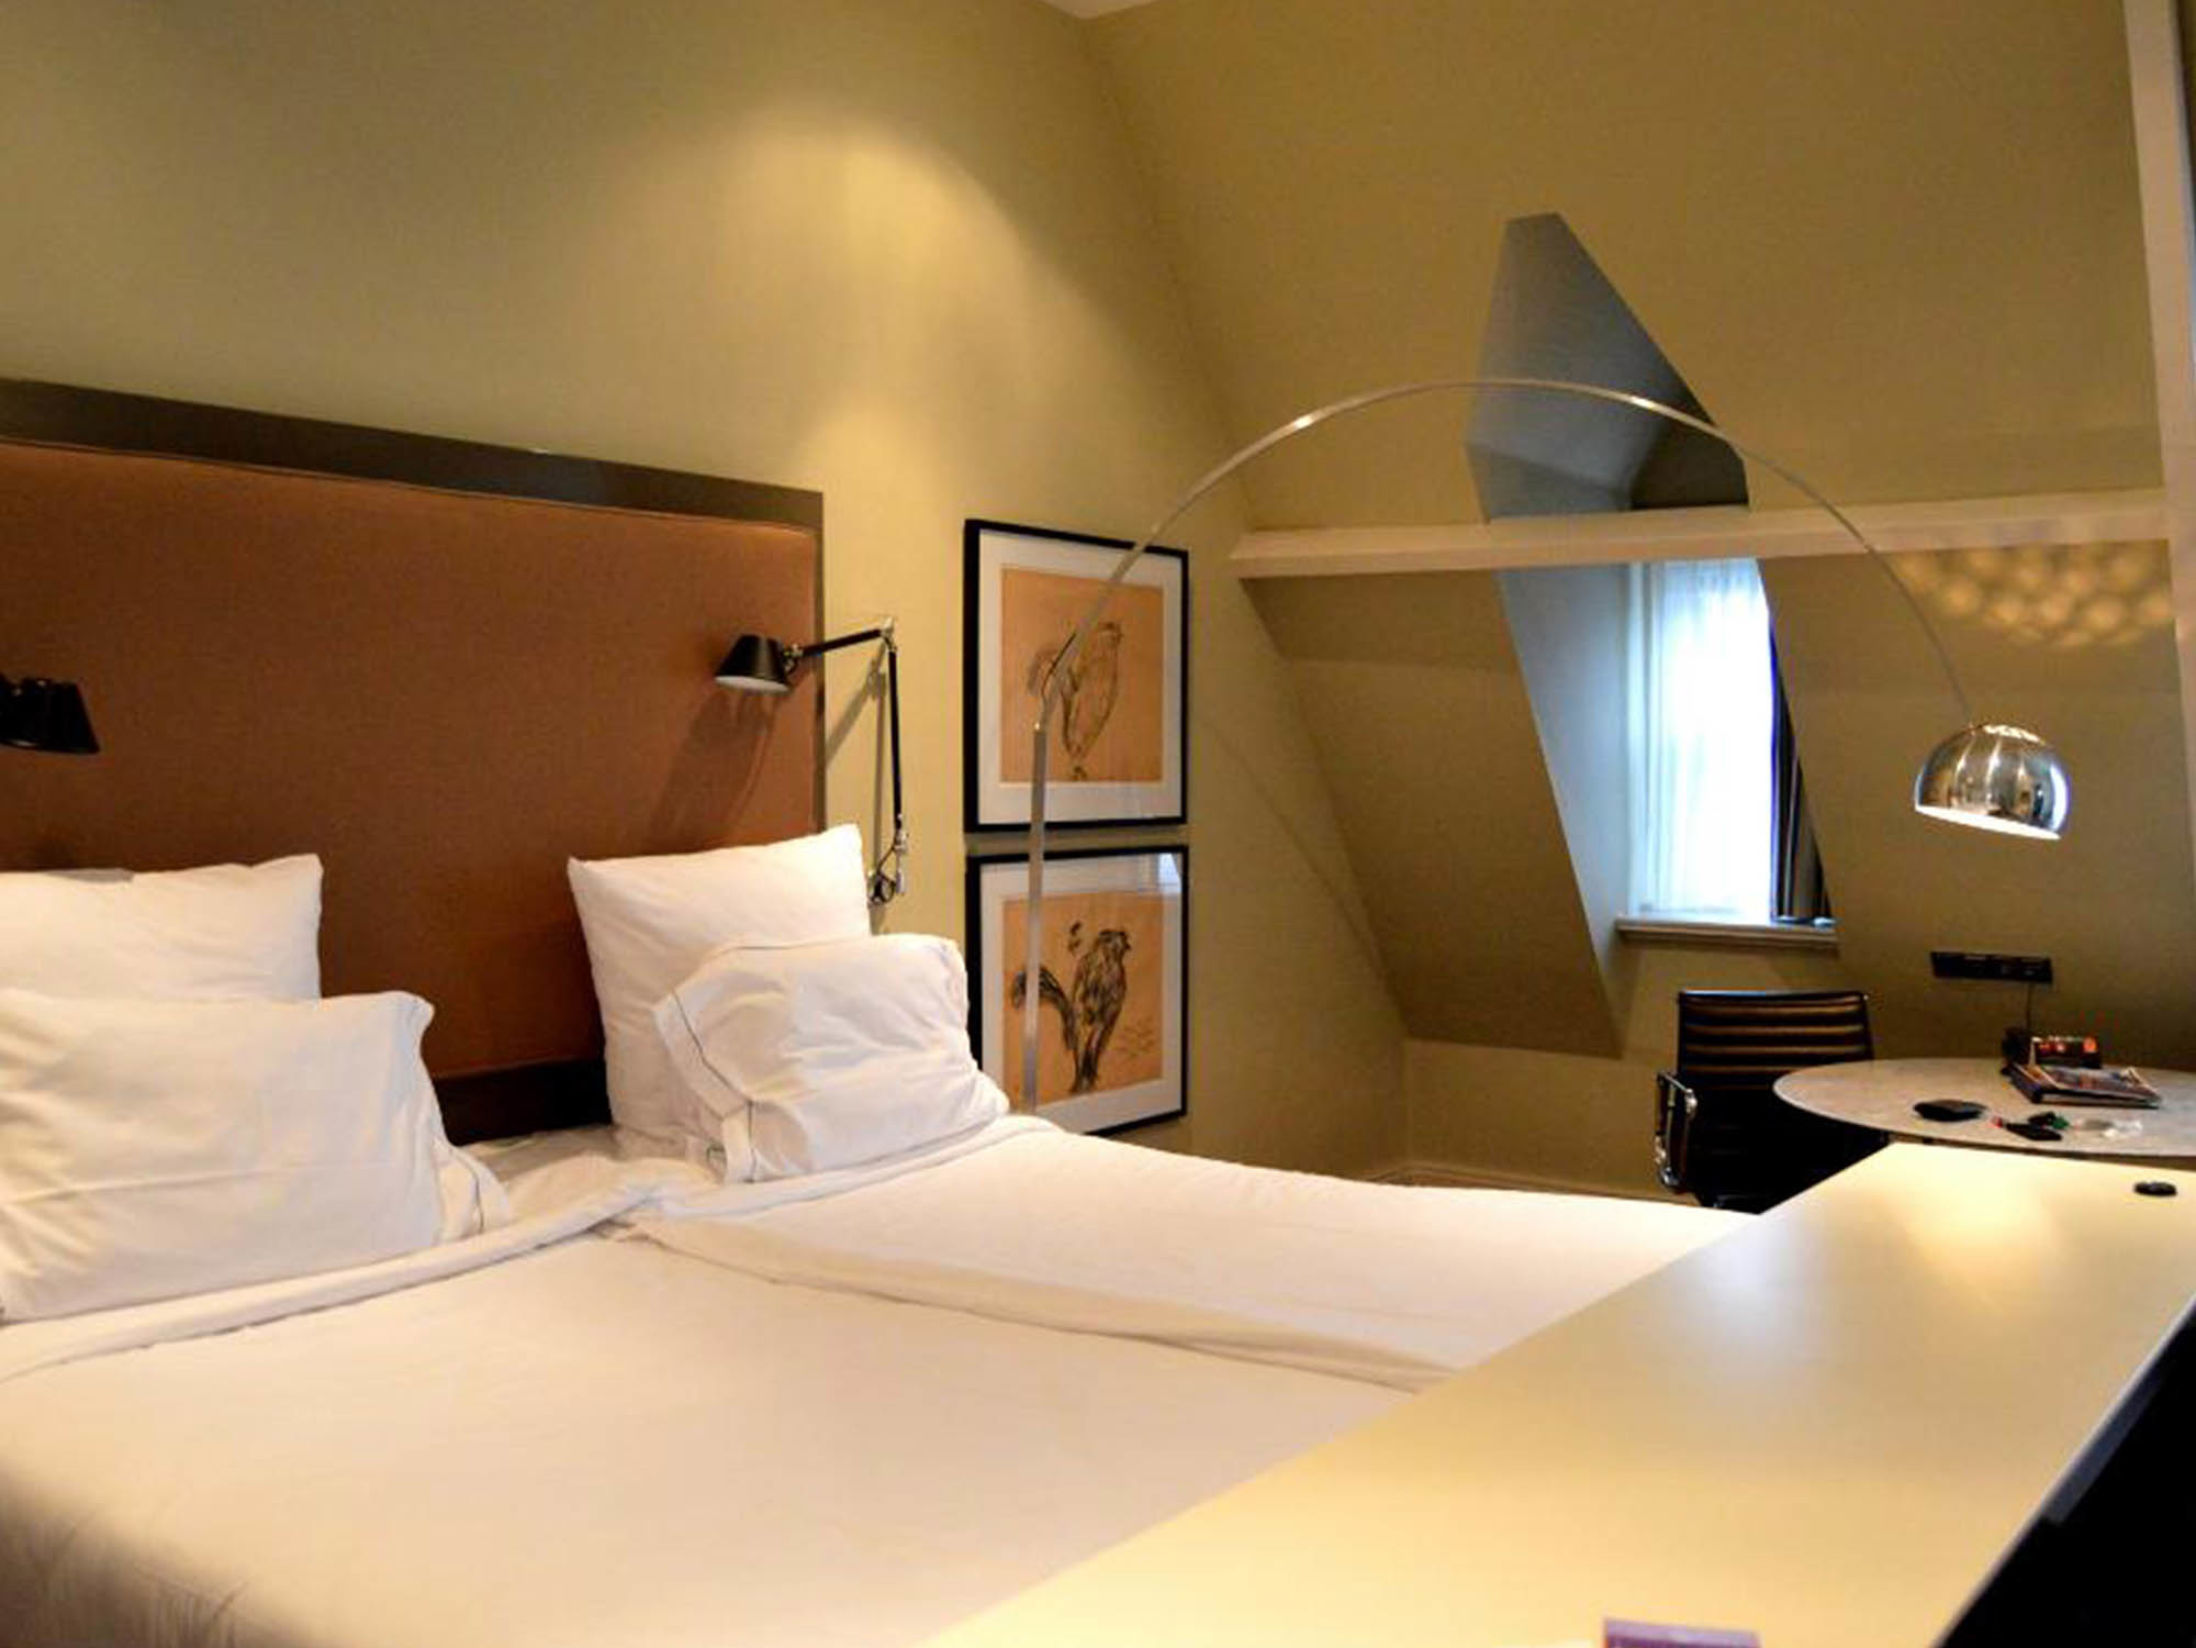 Best Hotels in Amsterdam - Hotel Roemer